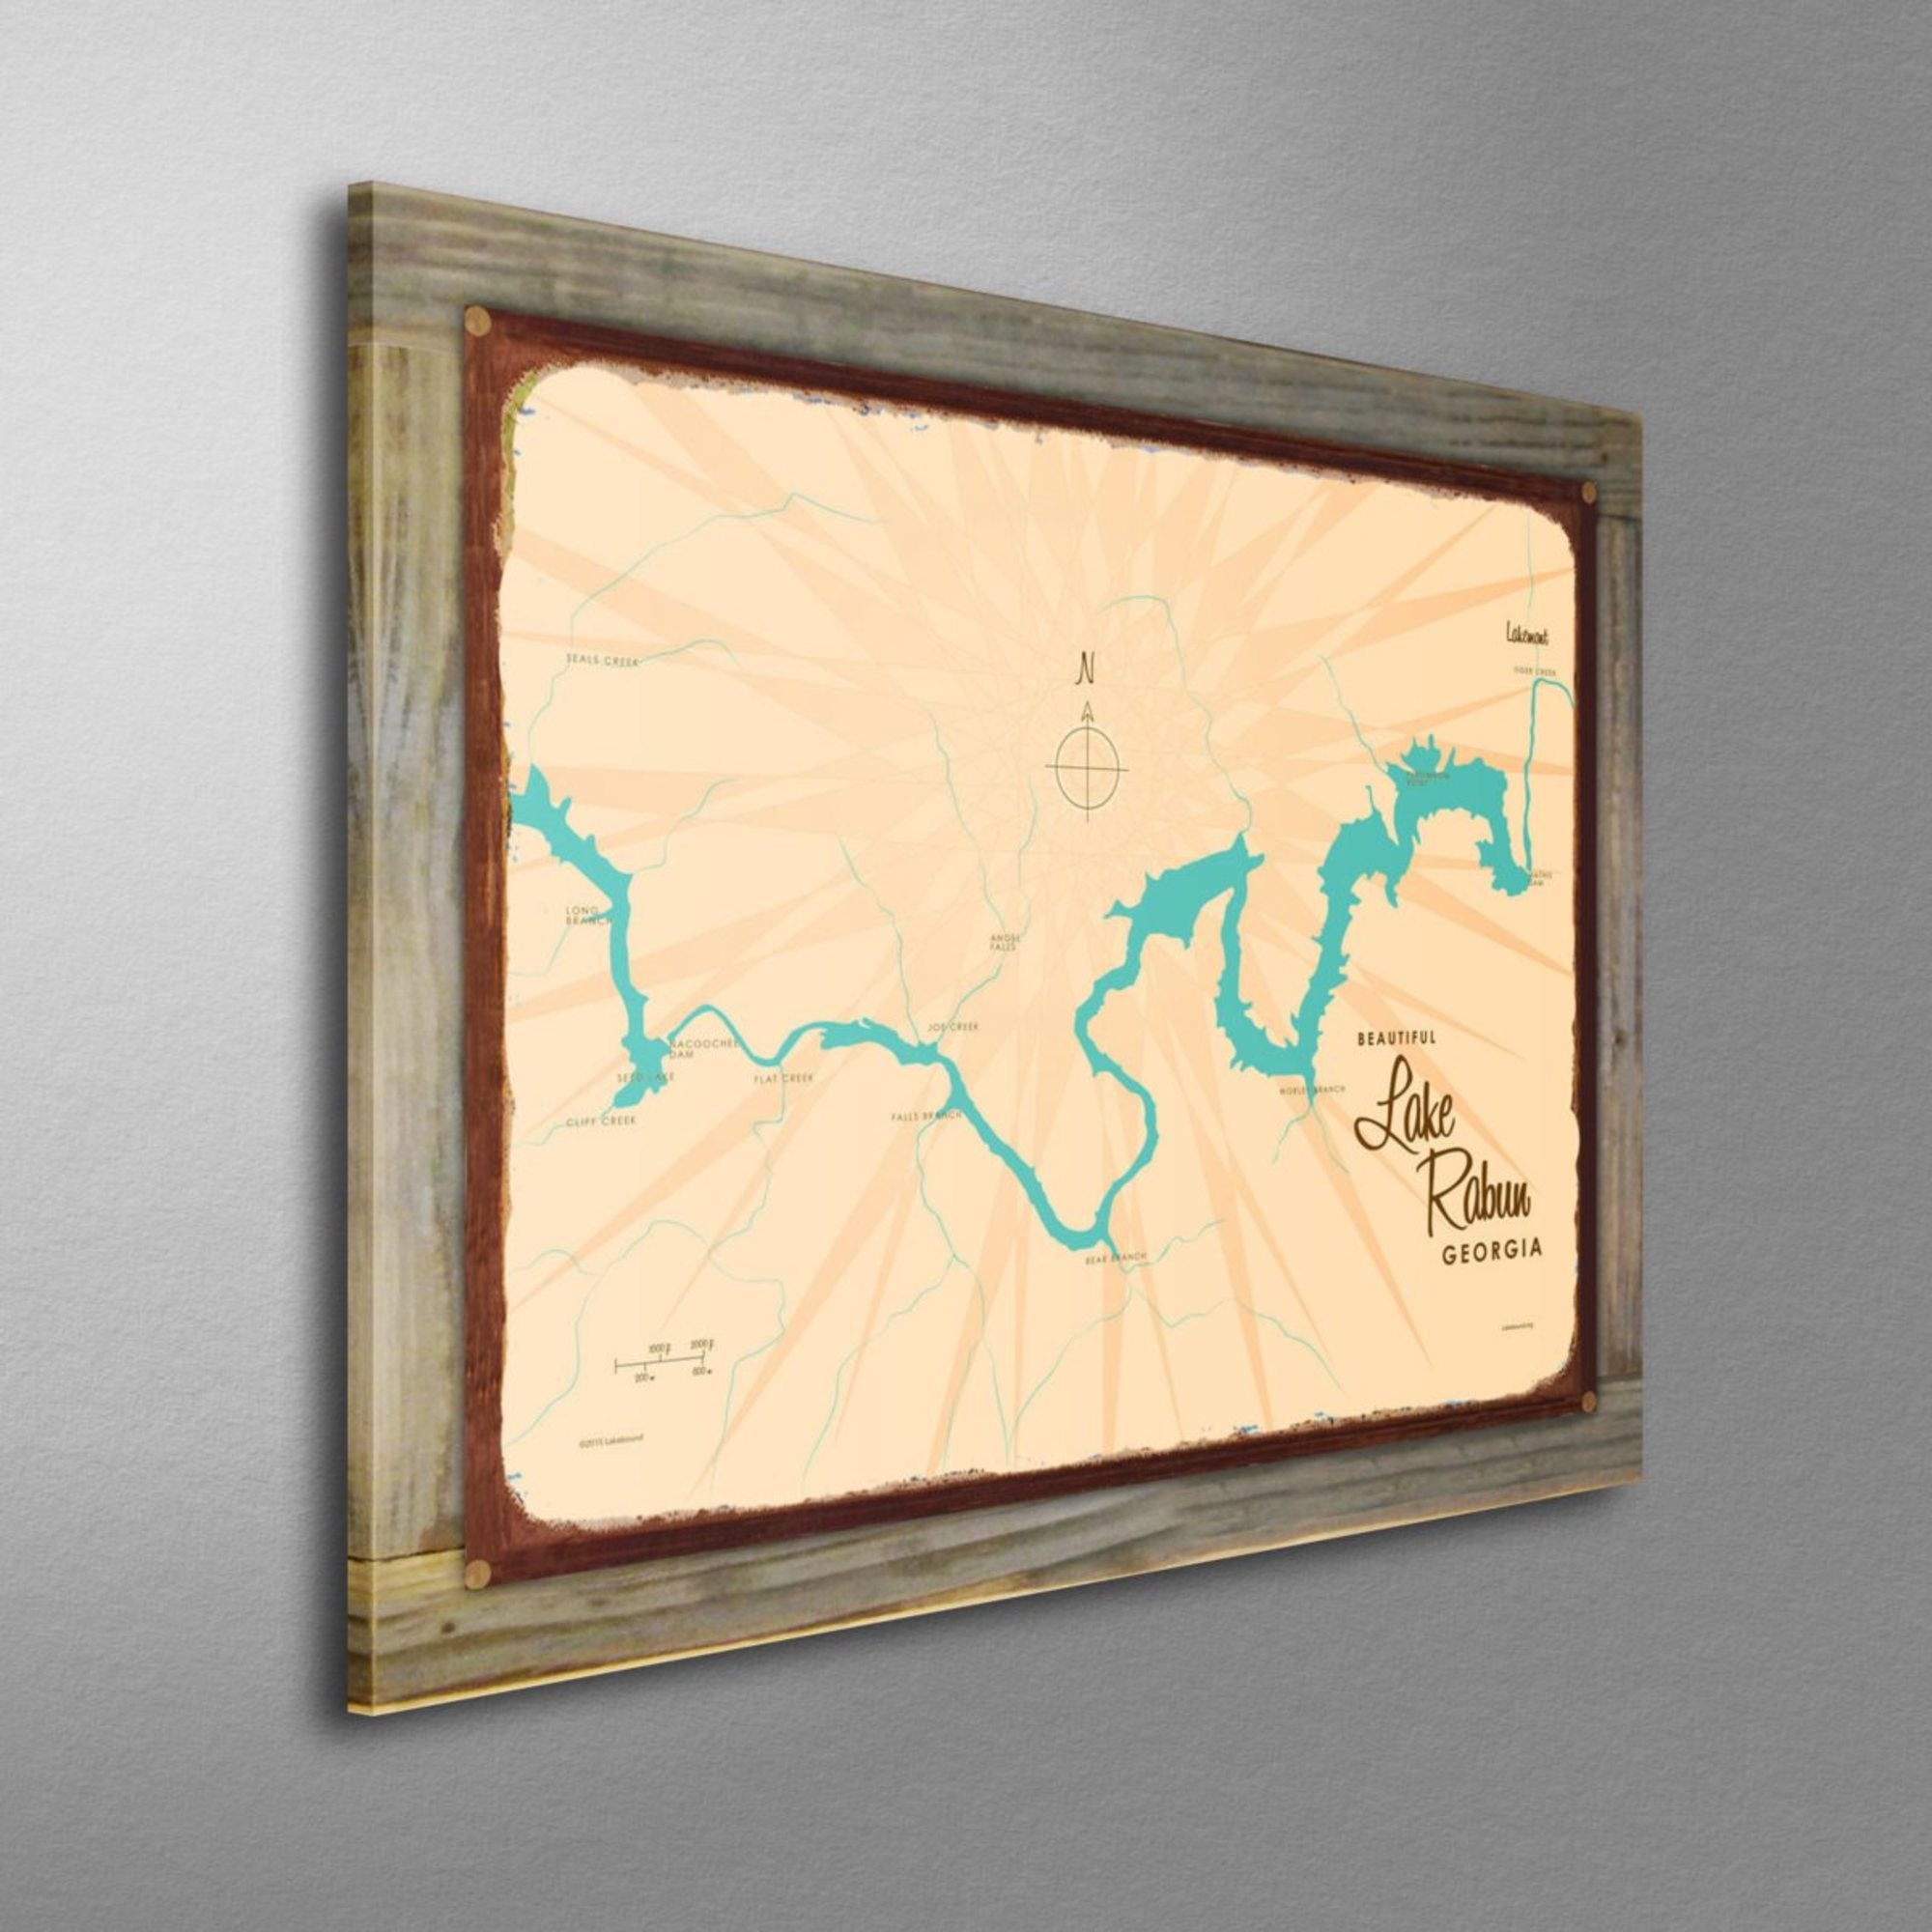 Lake Rabun Georgia, Wood-Mounted Rustic Metal Sign Map Art